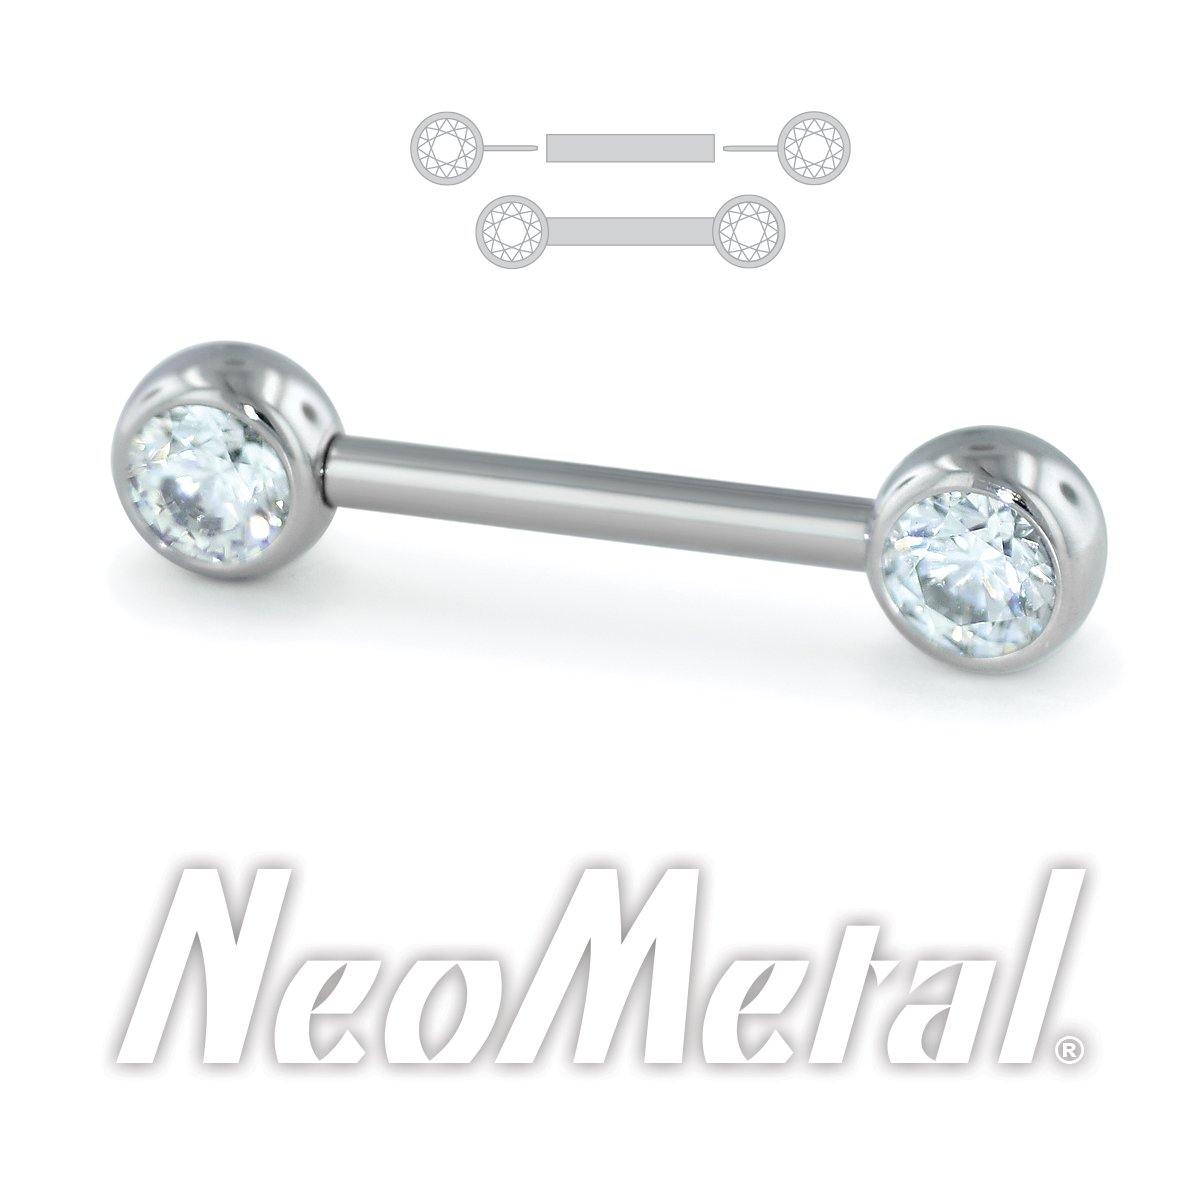 Neometal Nipple Bar With White Cz Gems Threadless